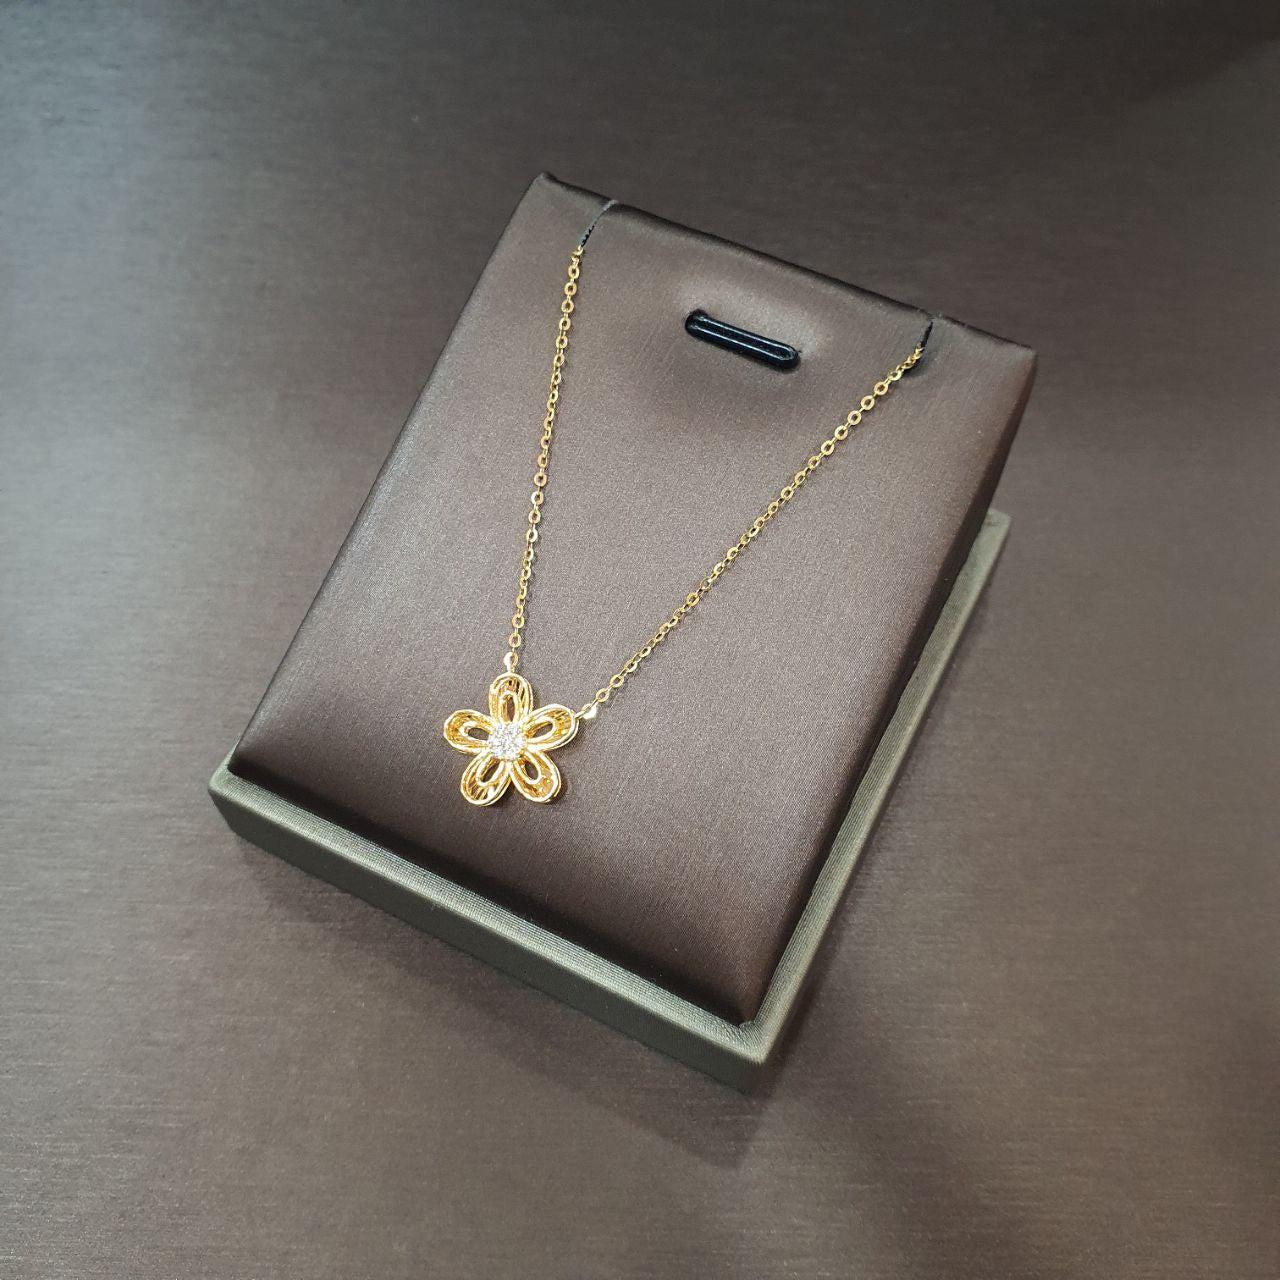 22k / 916 Gold Necklace with Pendant different design-Necklaces-Best Gold Shop